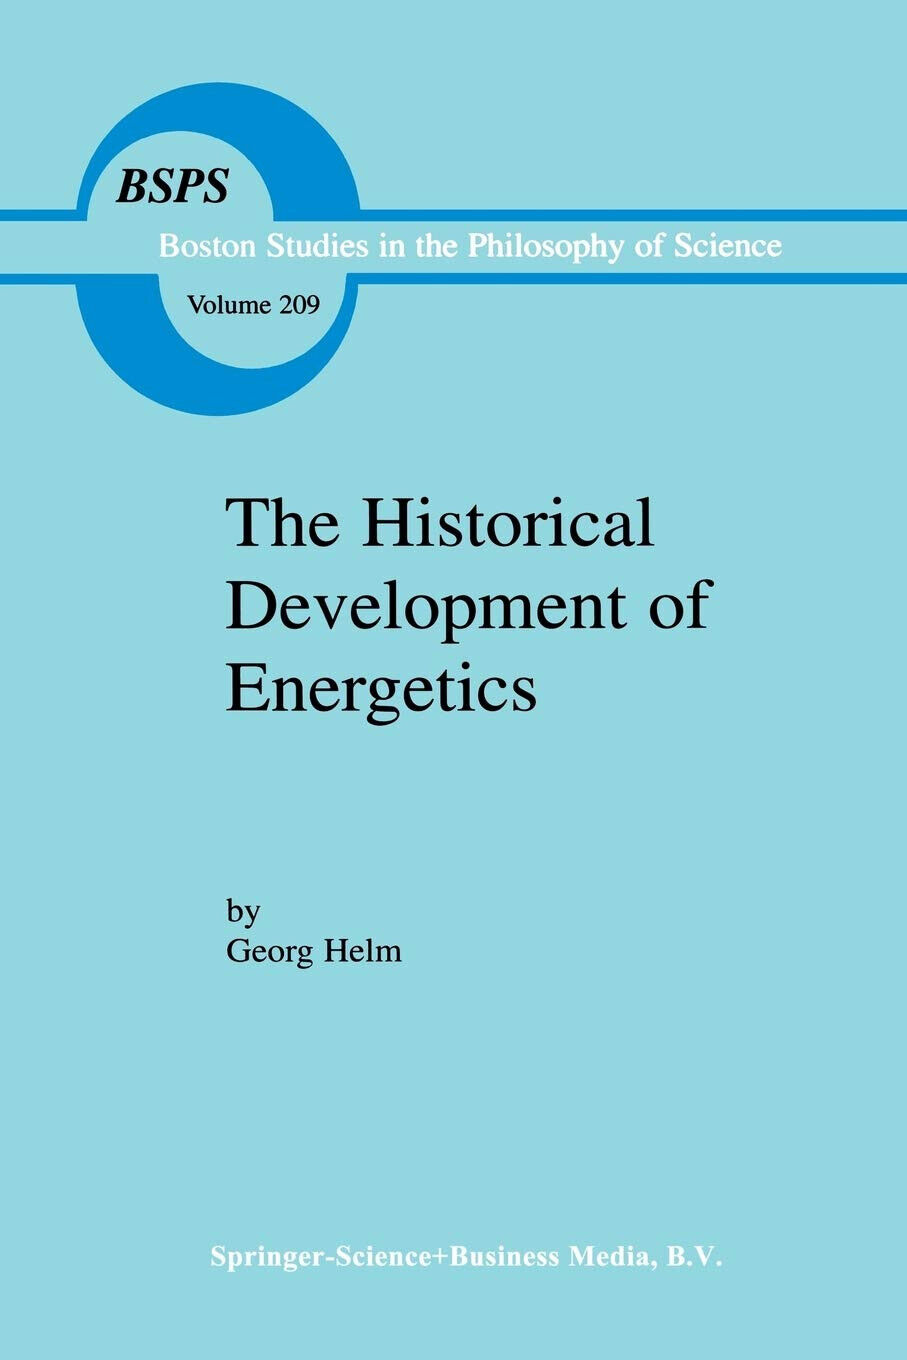 The Historical Development of Energetics - Georg Helm - Springer, 2000